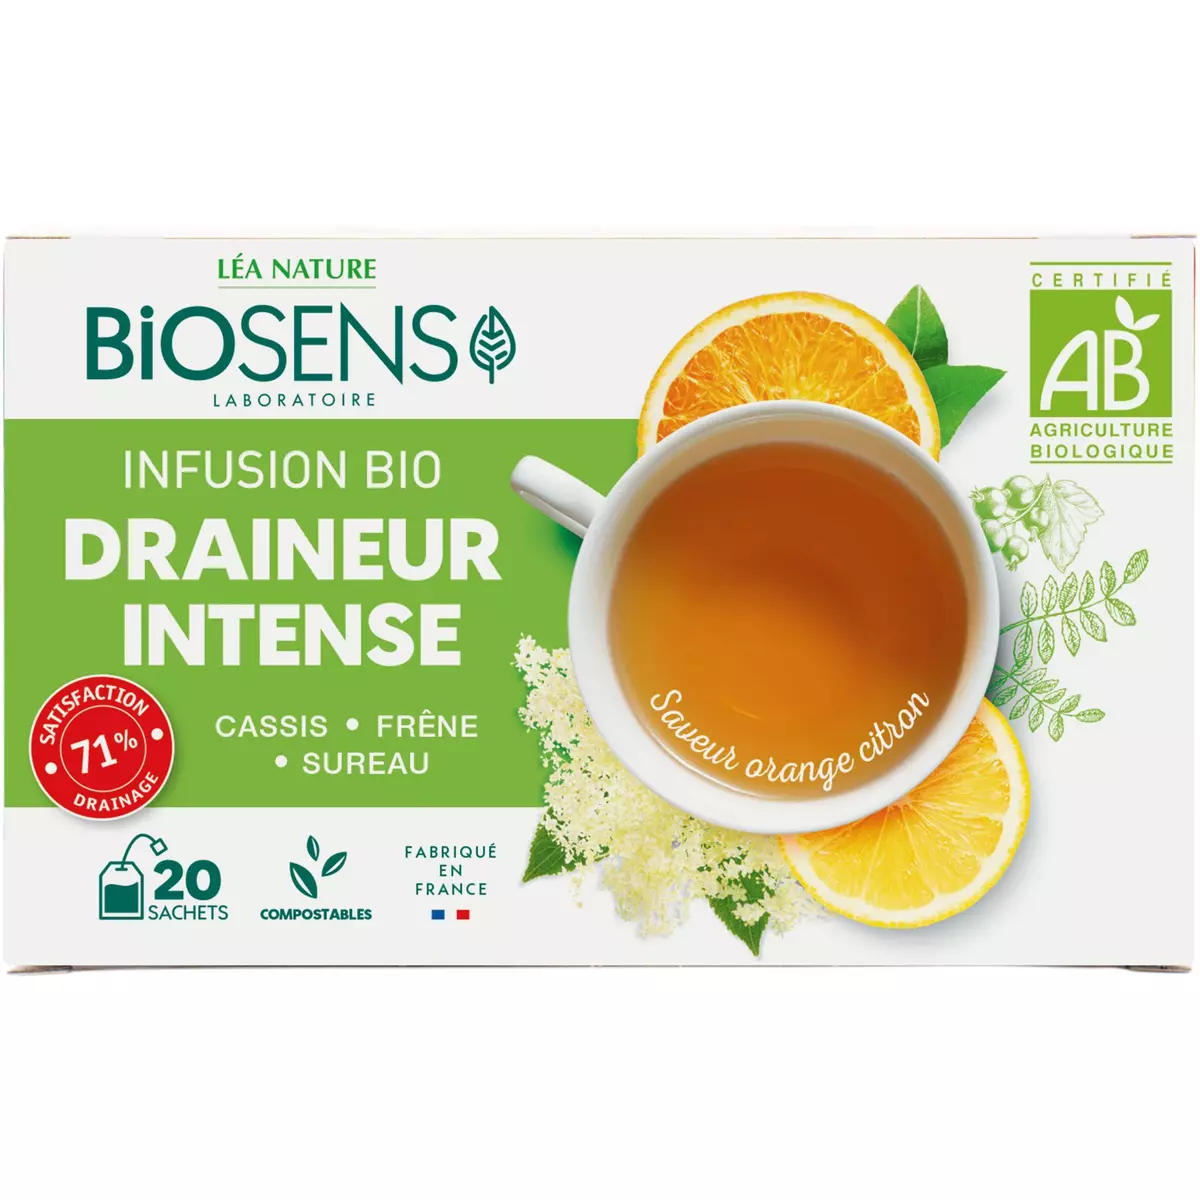 BIOSENS Infusion bio draineur intense saveur orange citron 20 sachets 30g